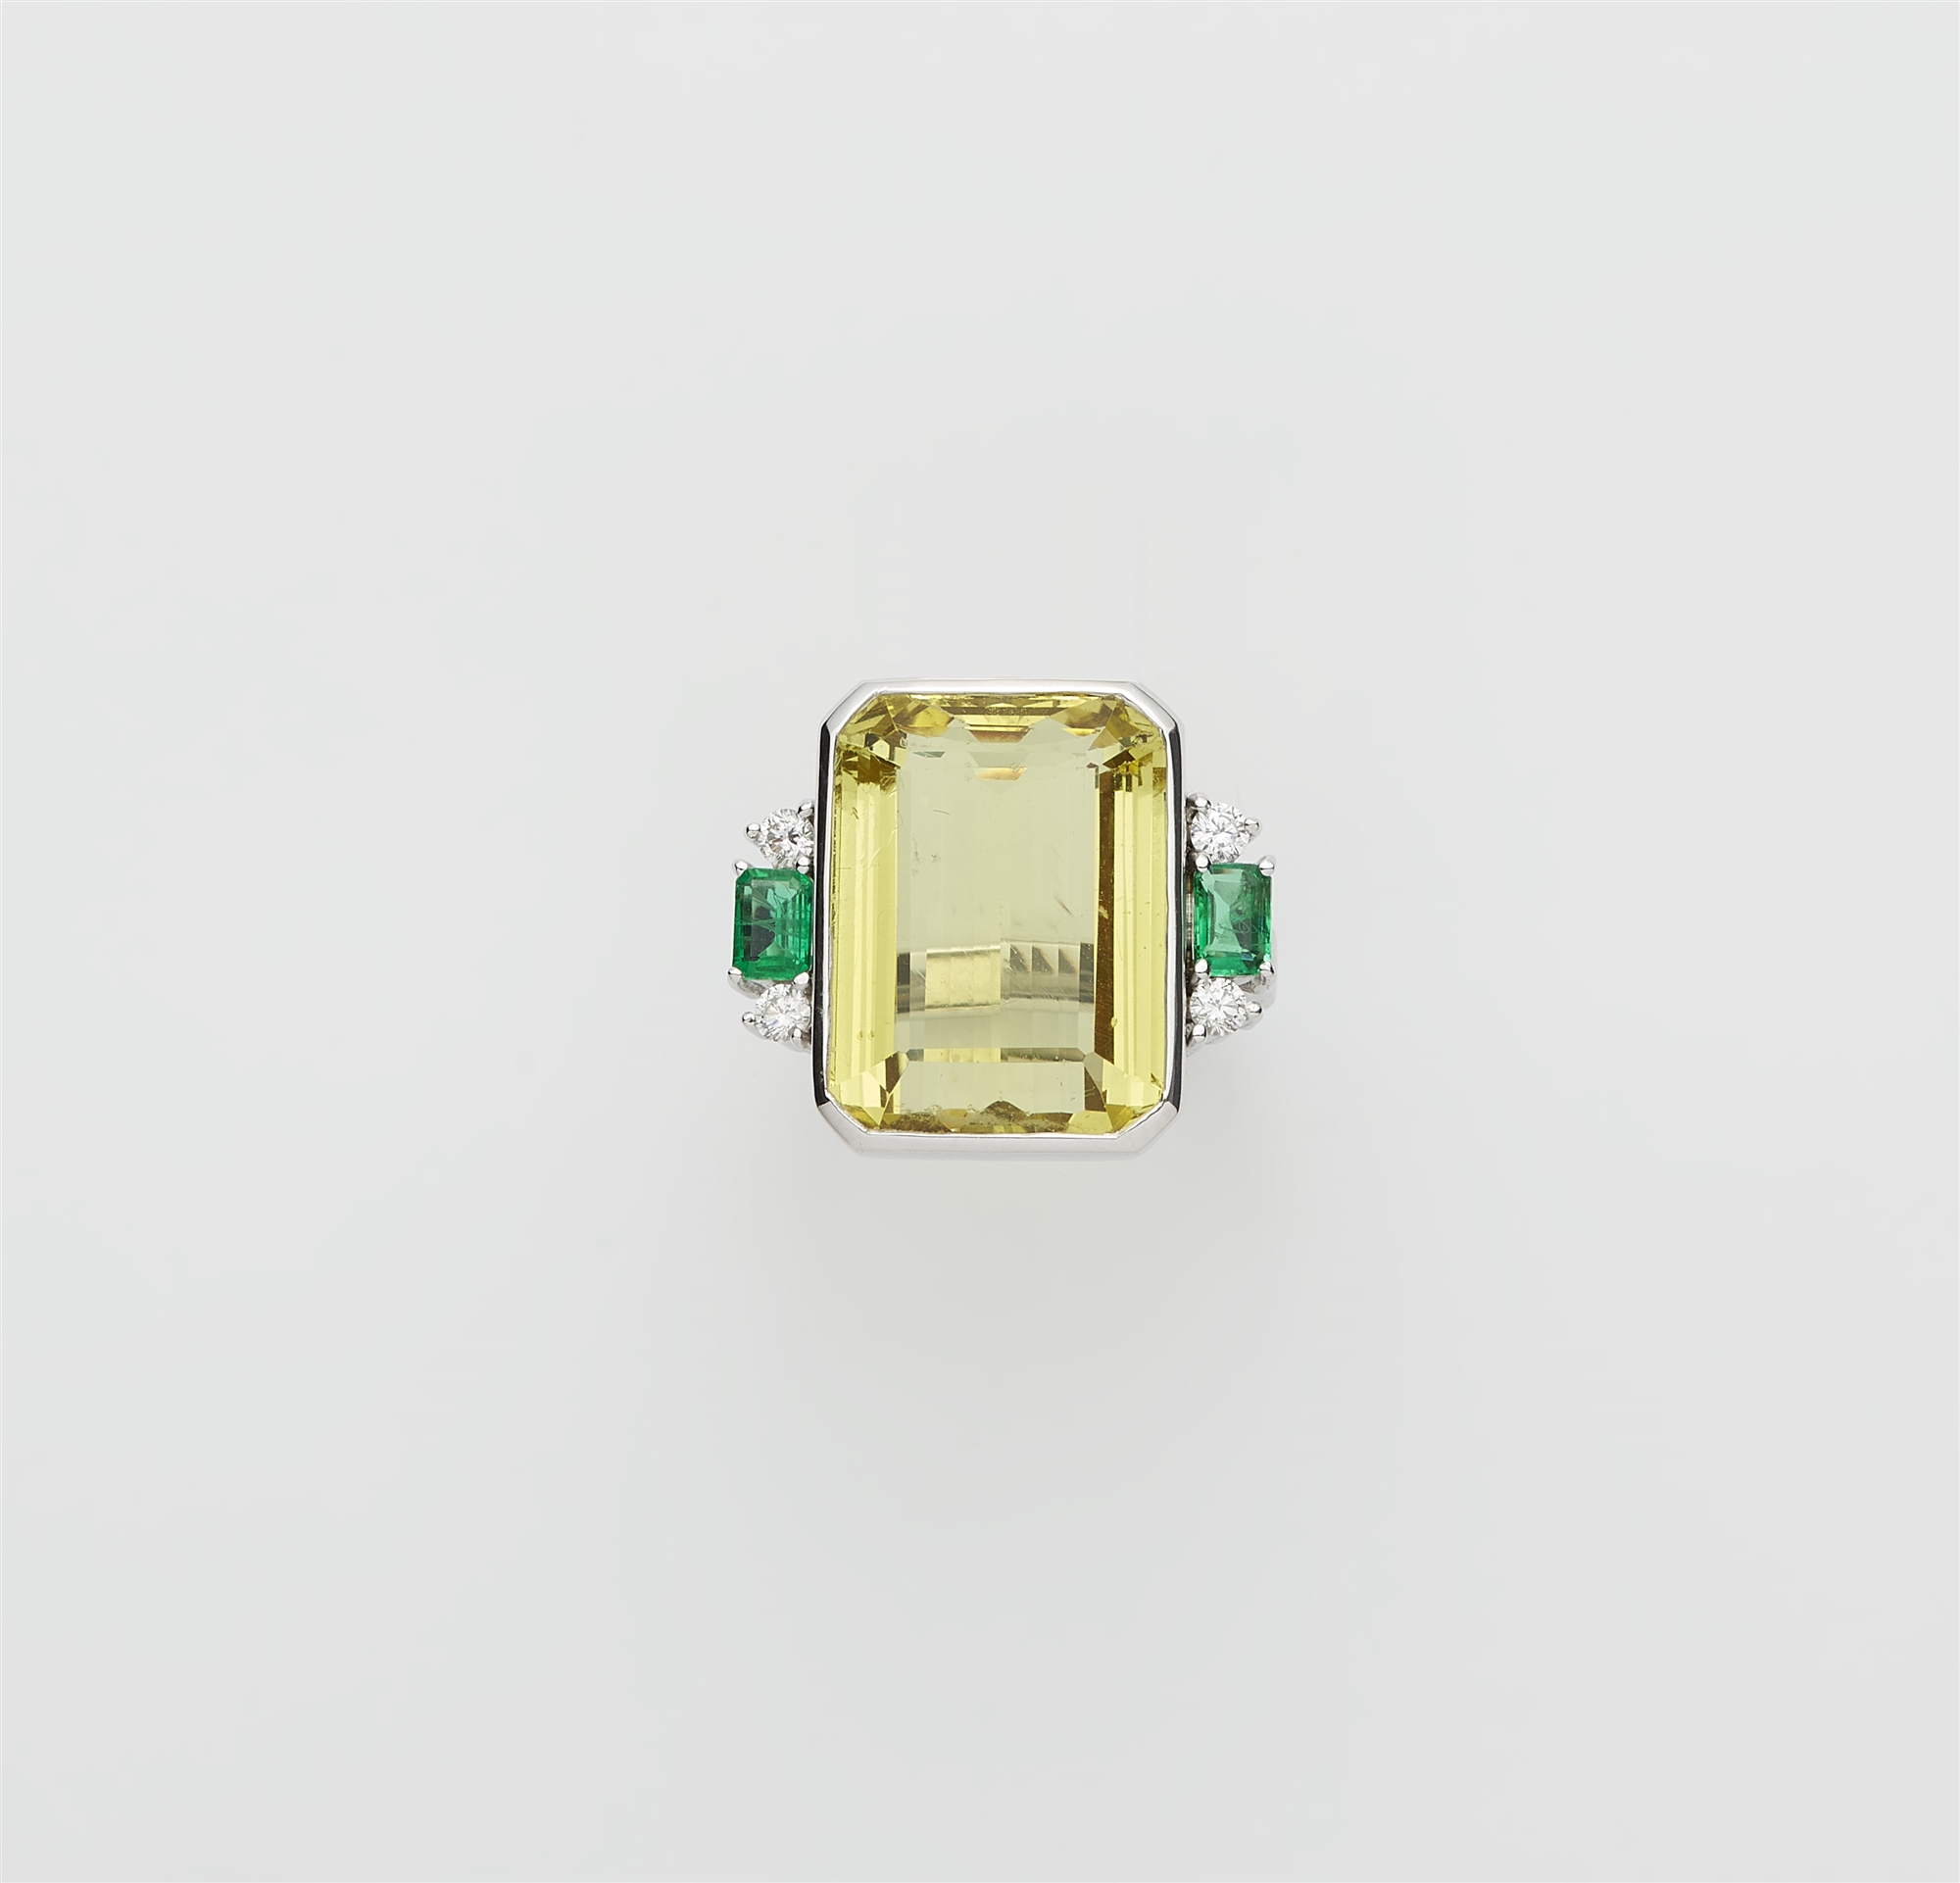 An 18k white gold diamond emerald and natural heliodor (lemon green beryl) ring.